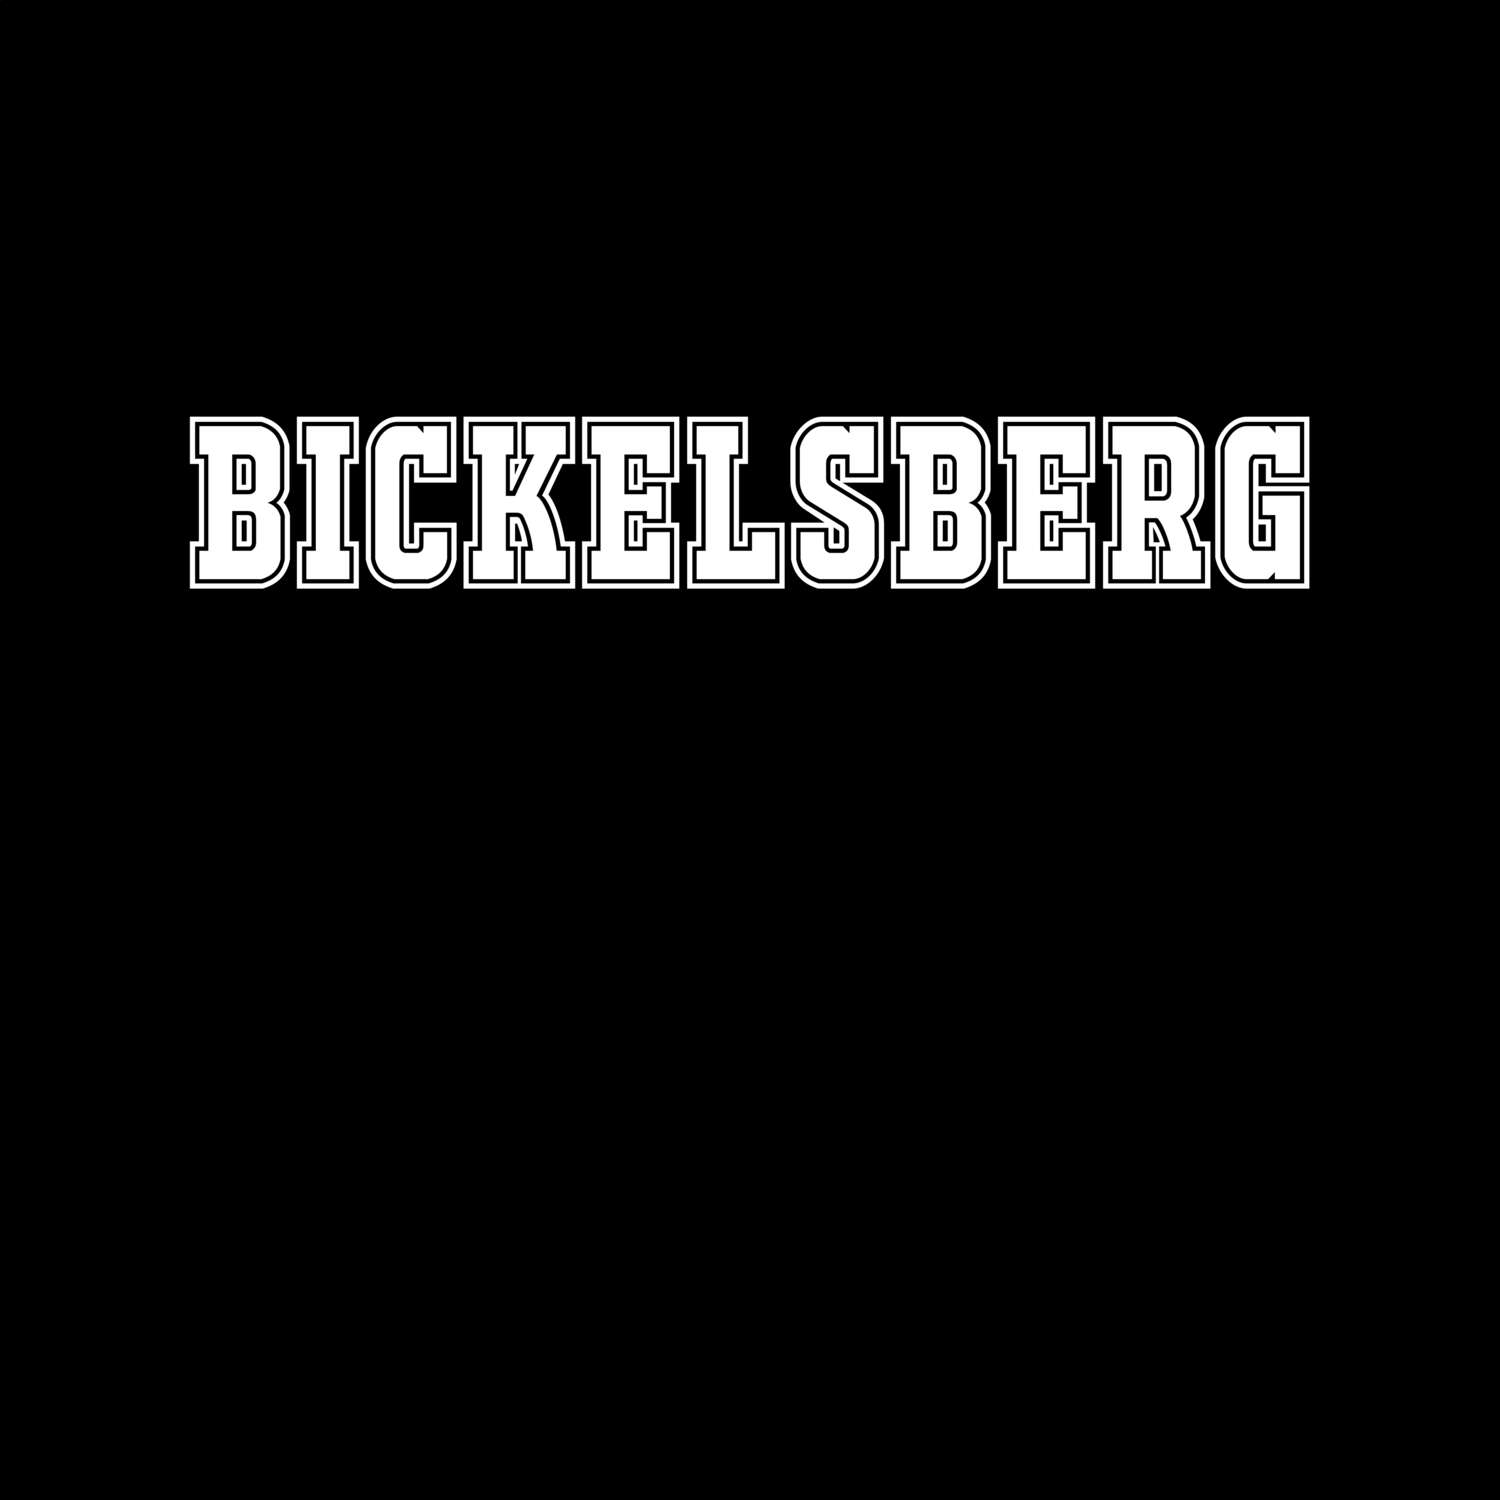 Bickelsberg T-Shirt »Classic«